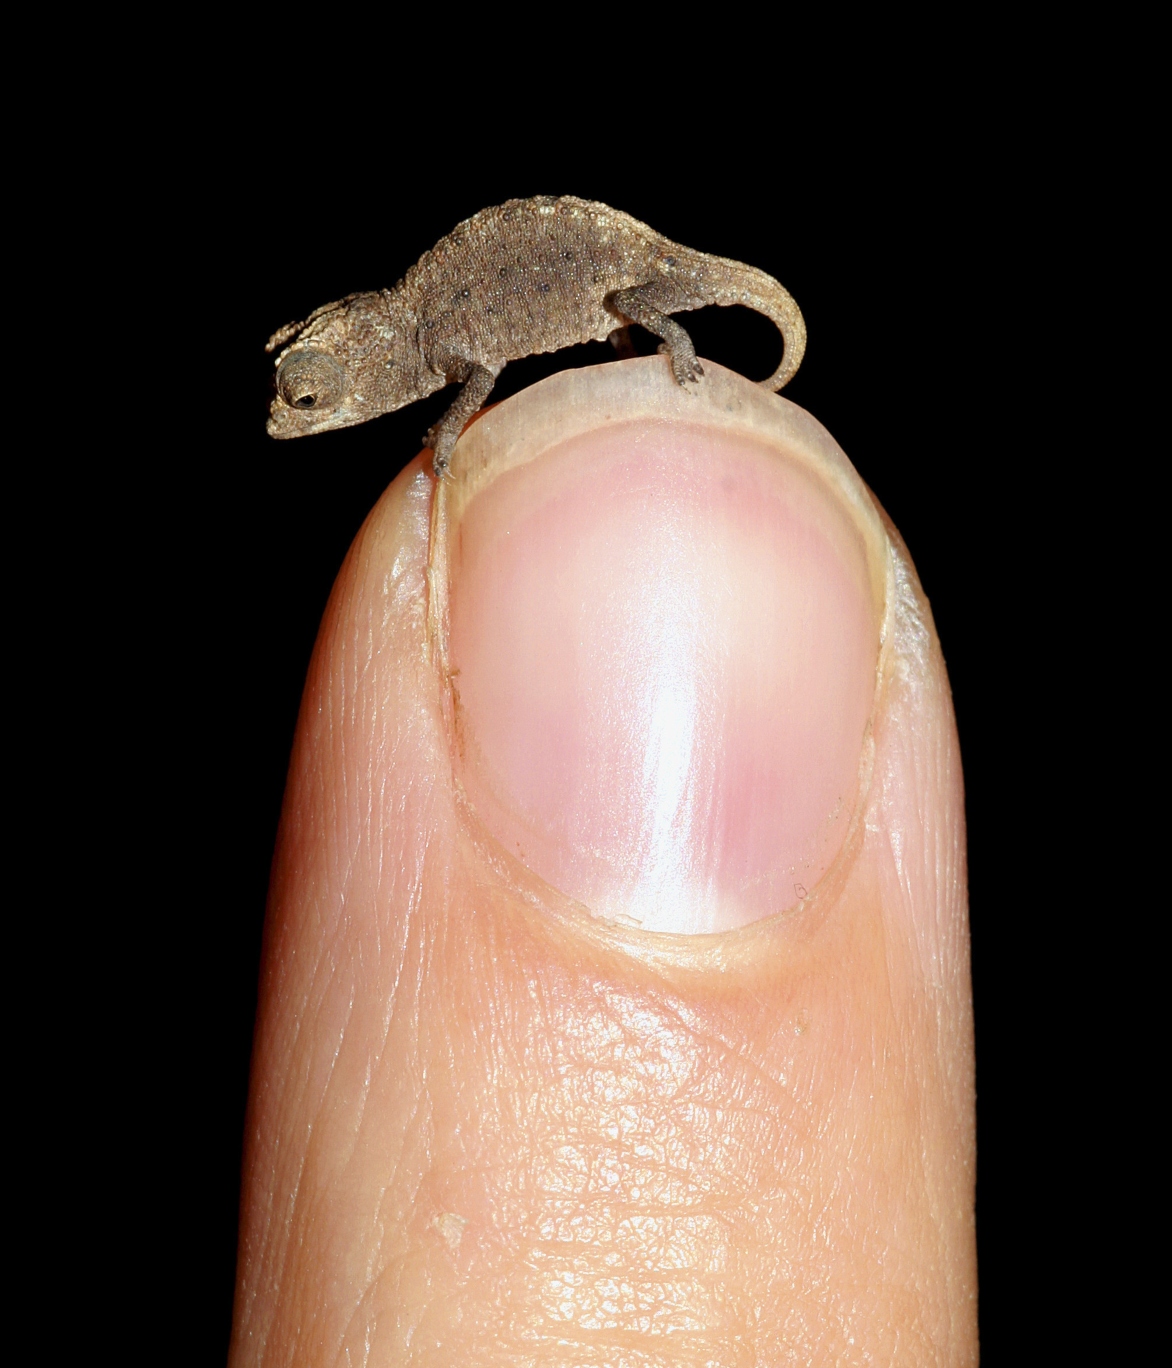 Tiny Brookesia Nana on the finger tip